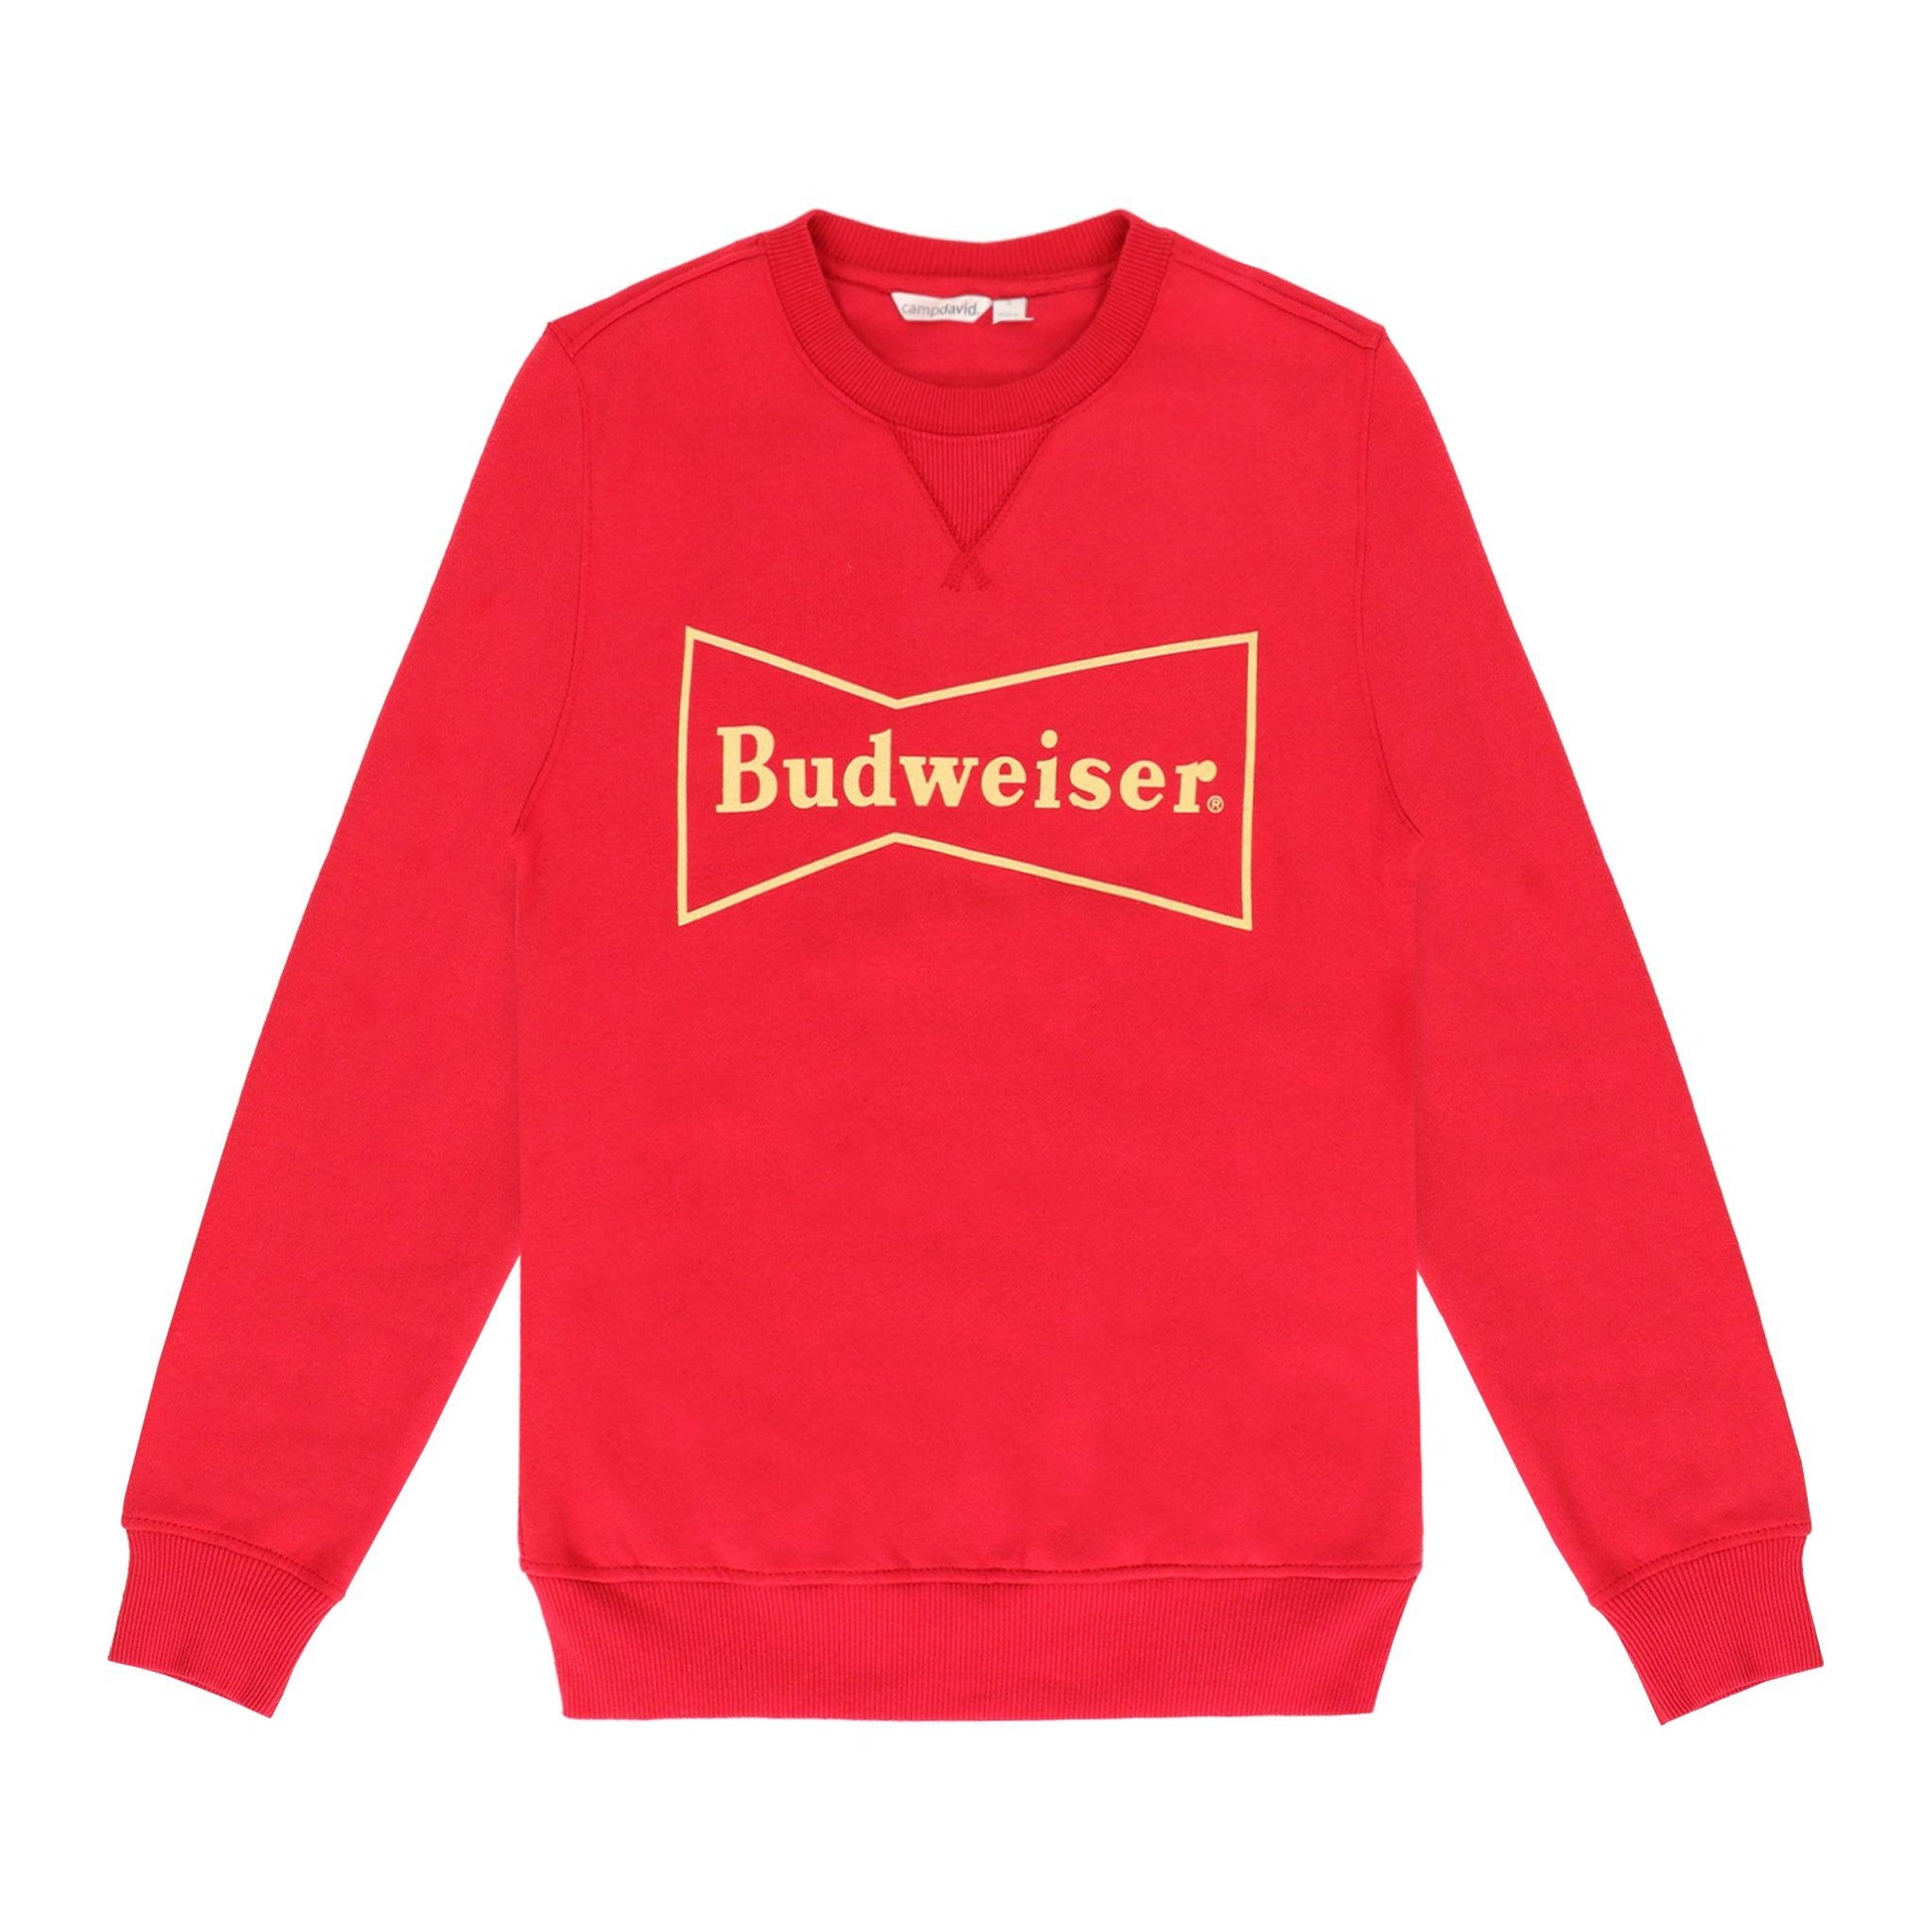 Red Budweiser crewneck sweatshirt with budweiser bowtie on front full chest of sweatshirt